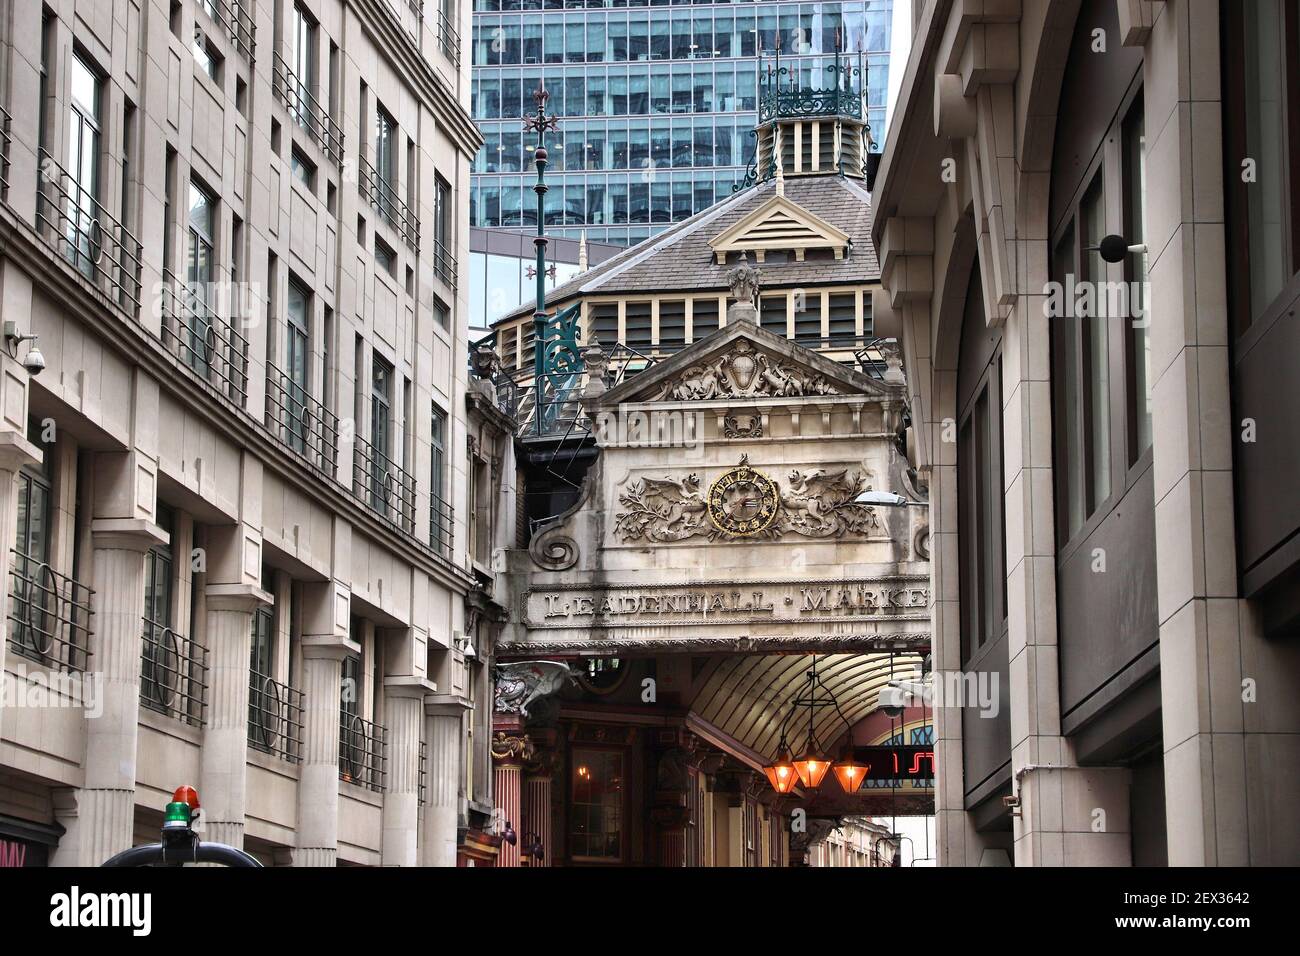 Leadenhall Market - landmark in City of London, UK. Stock Photo